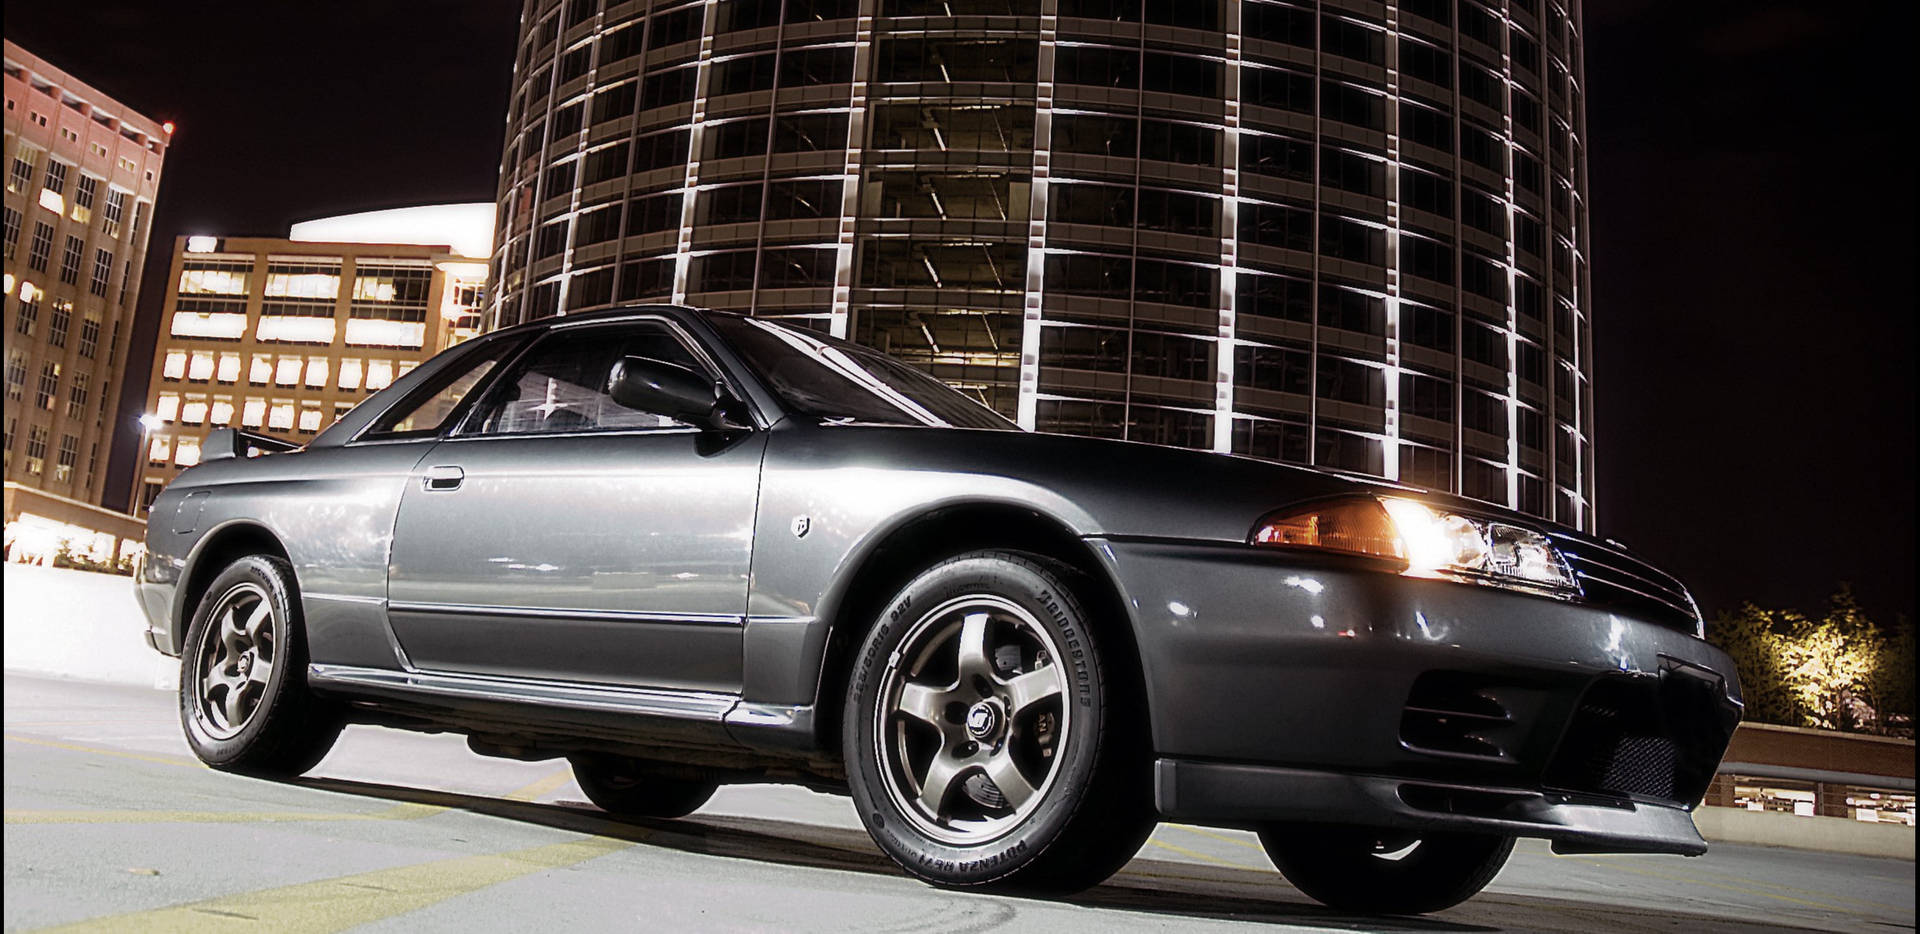 Captivating Nissan Skyline Gtr R33- Powerhouse Of Speed And Elegance